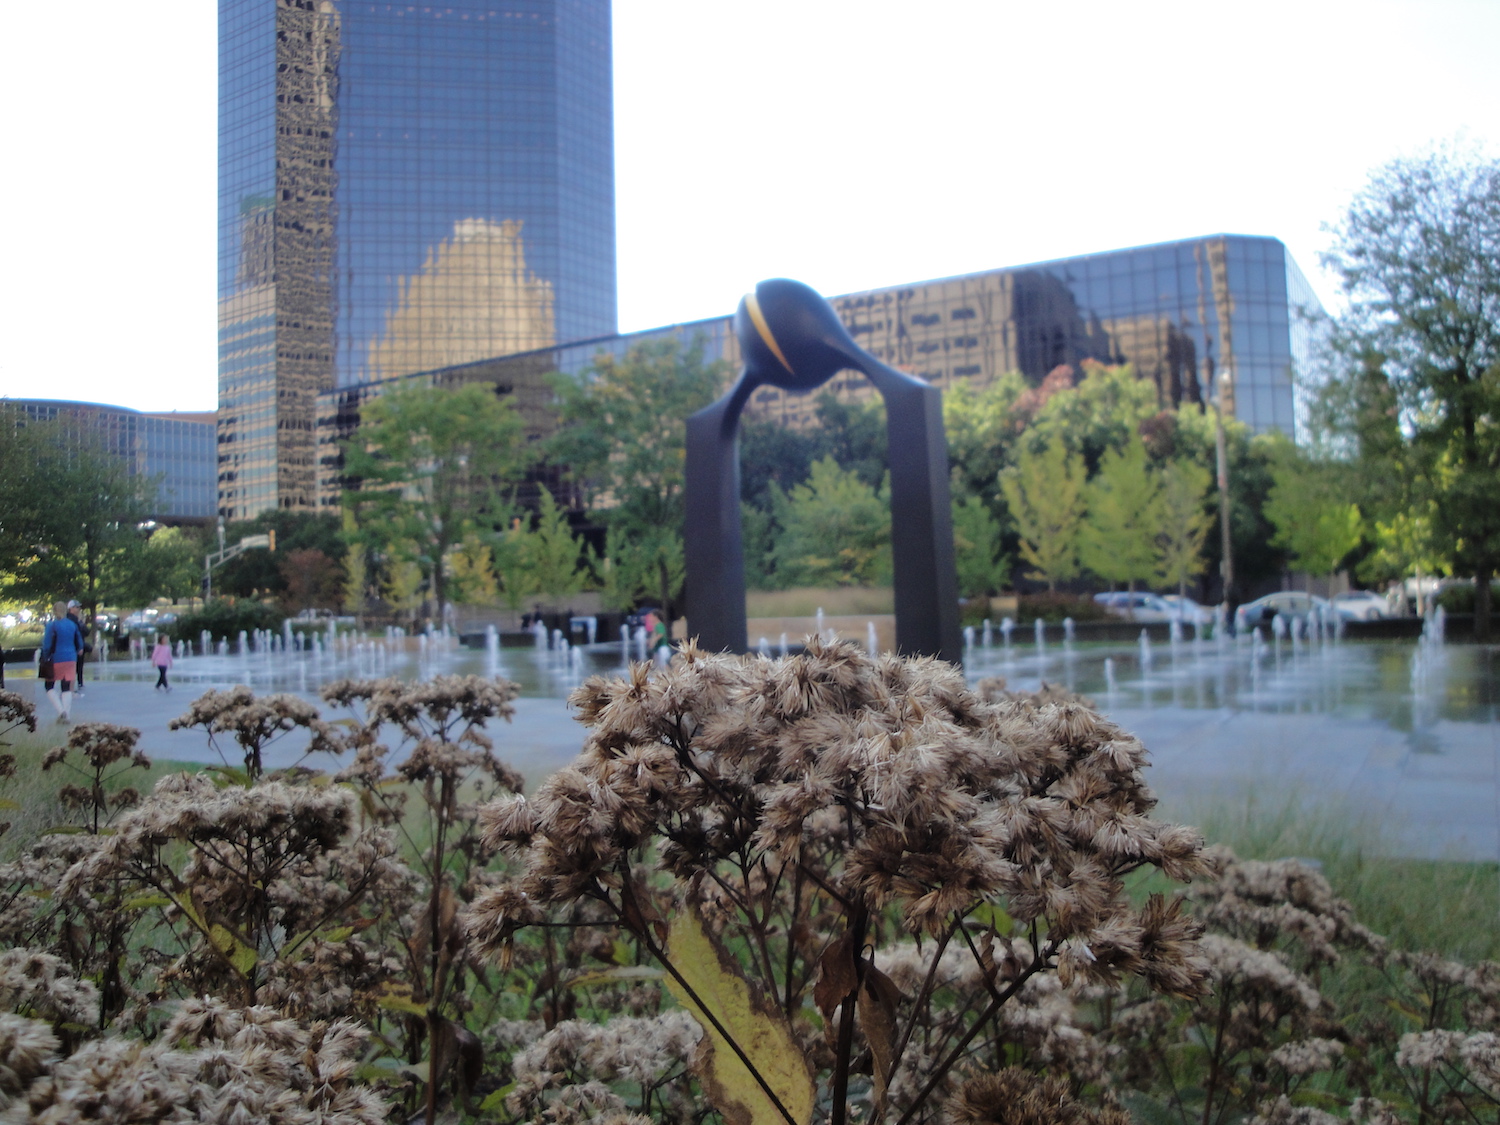 urban gardening efforts in St. Louis include sculpture